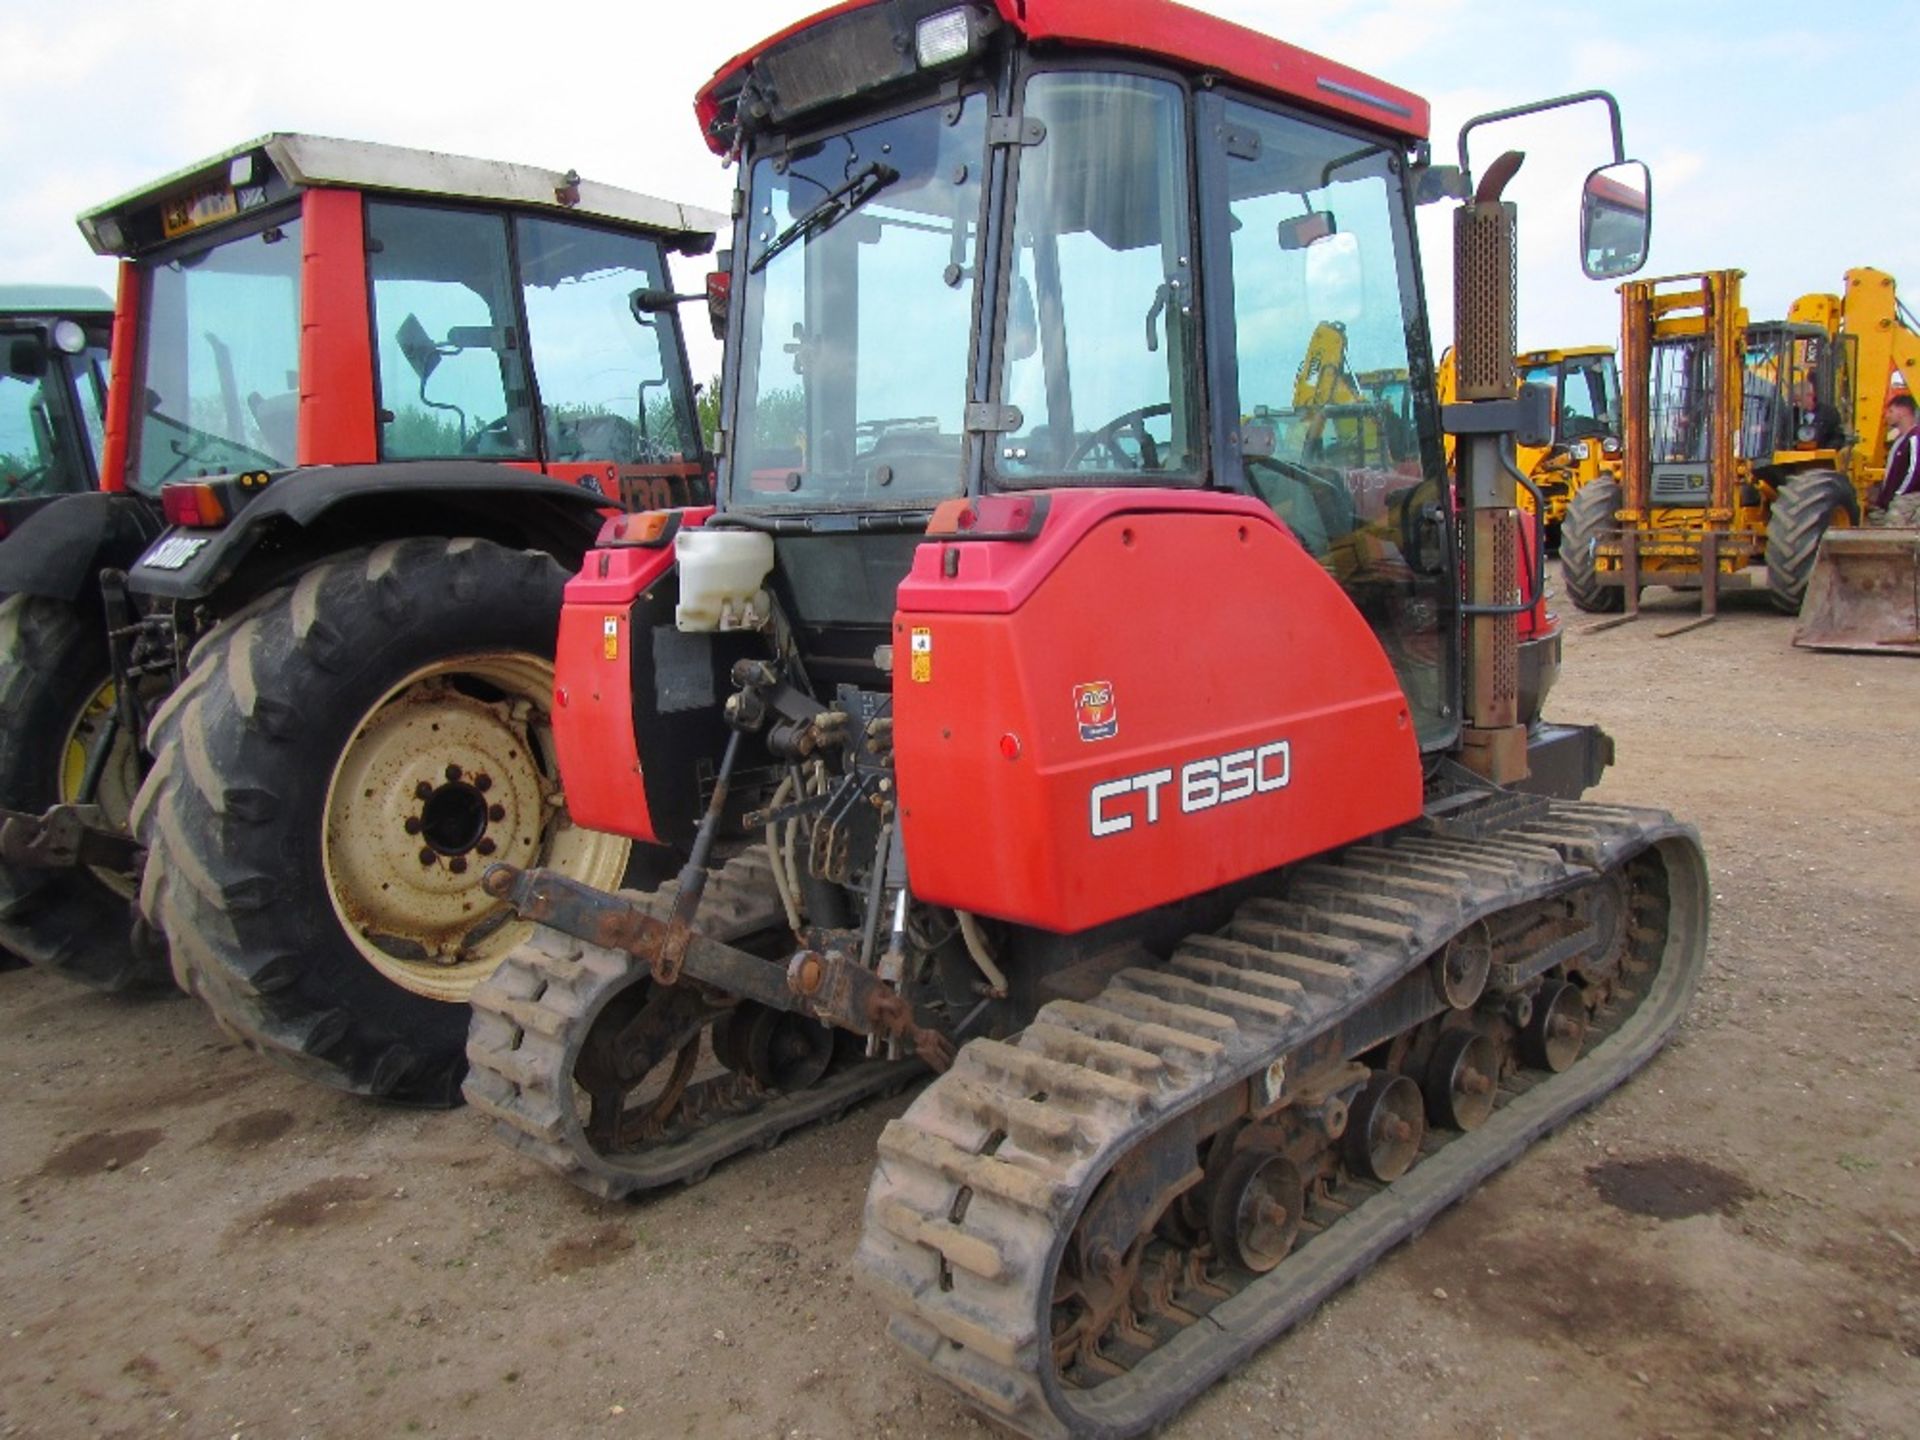 Yanmar LT650 Tractor c/w rubber tracks, full linkage & pto - Image 3 of 3